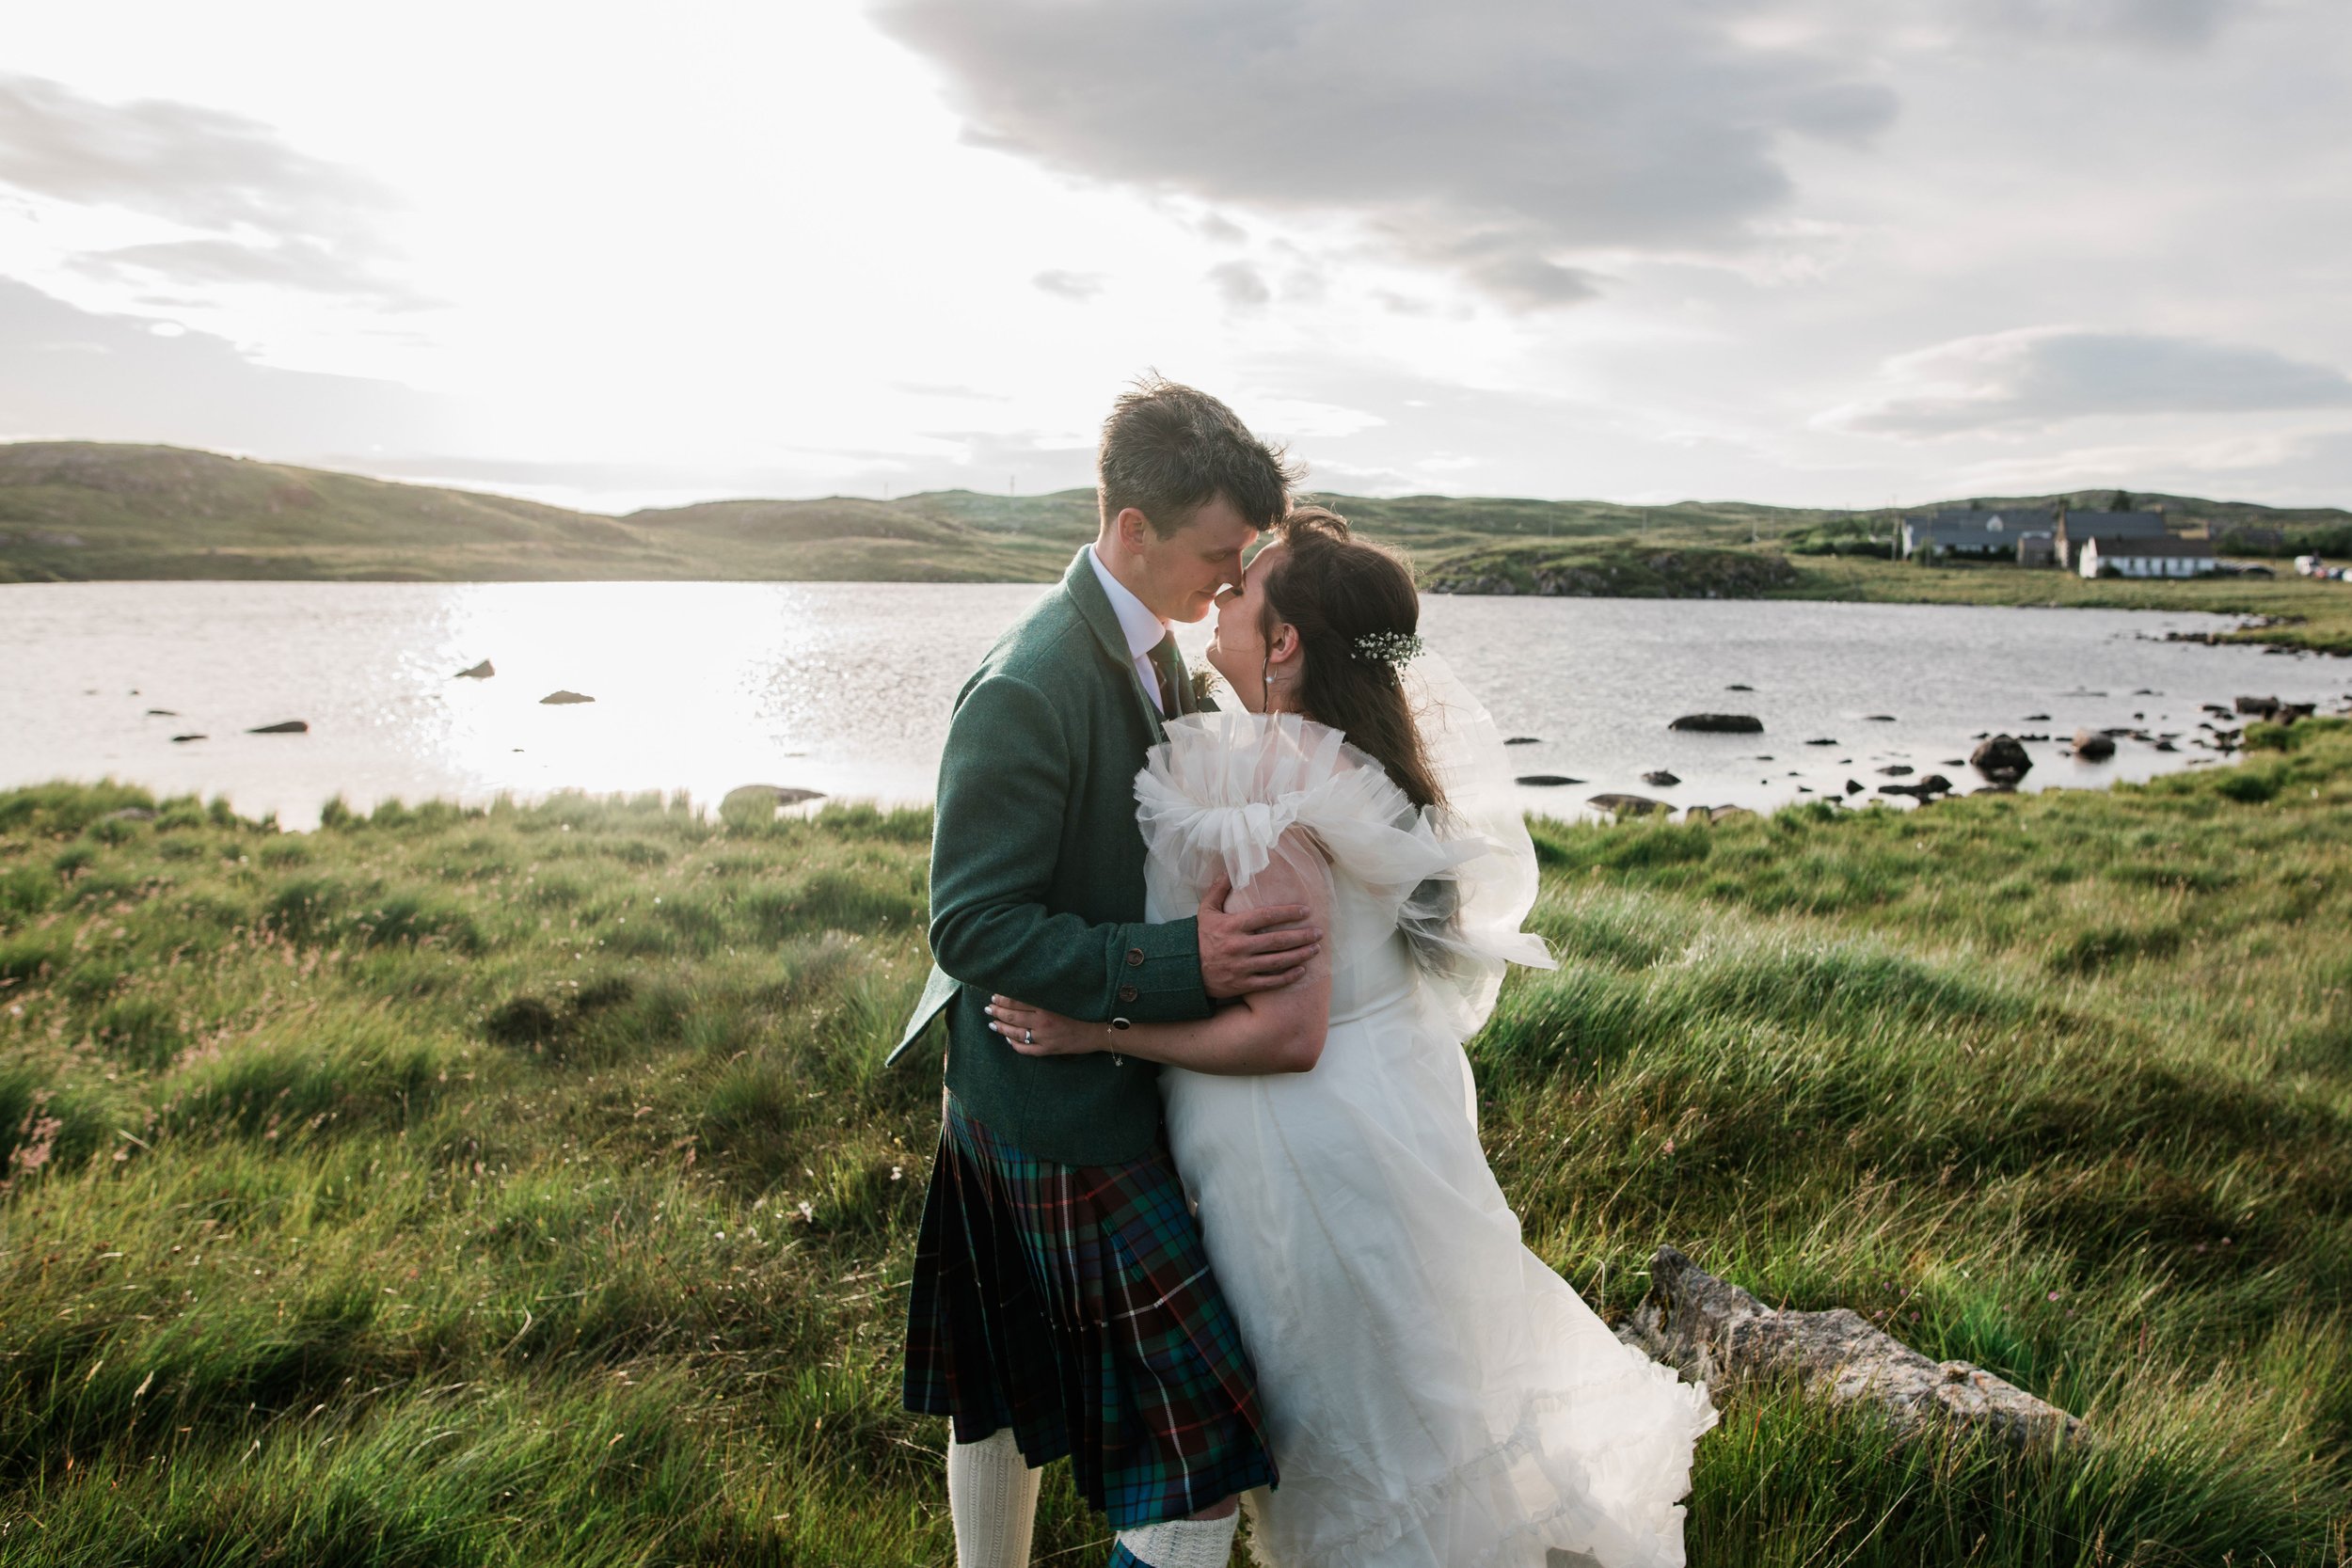 Quirky-natural-wedding-photographer-videographer-films-scotland 006.jpg